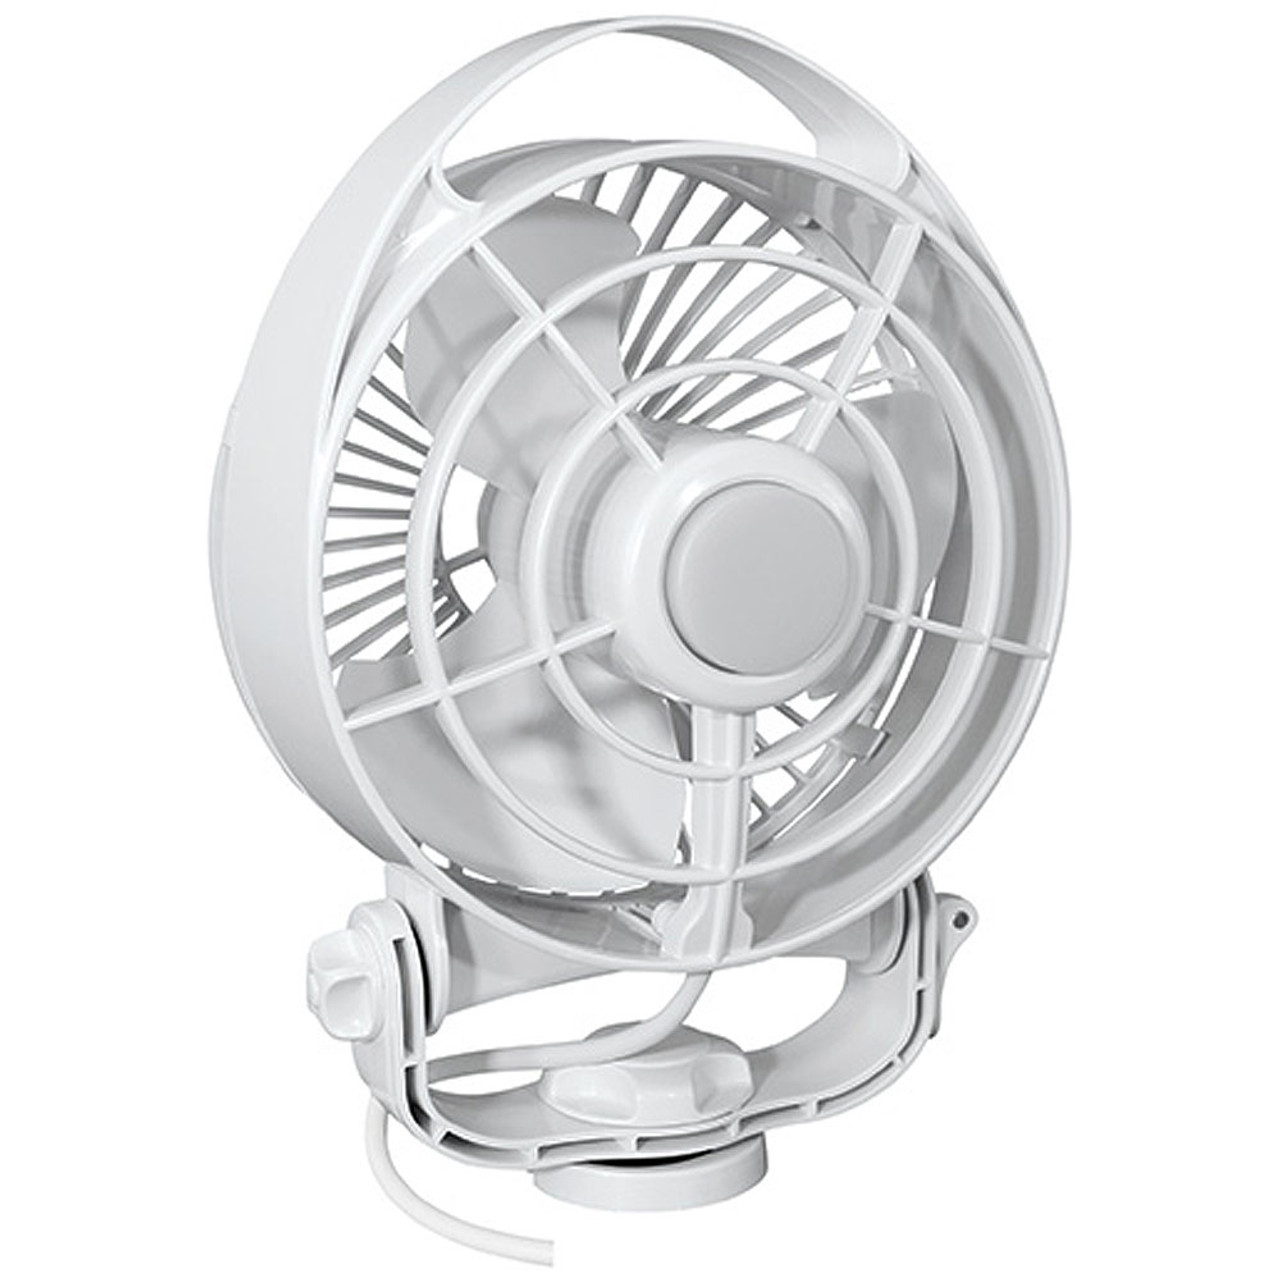 Caframo Maestro 12V 3-Speed 6" Marine Fan w\/LED Light - White [7482CAWBX]